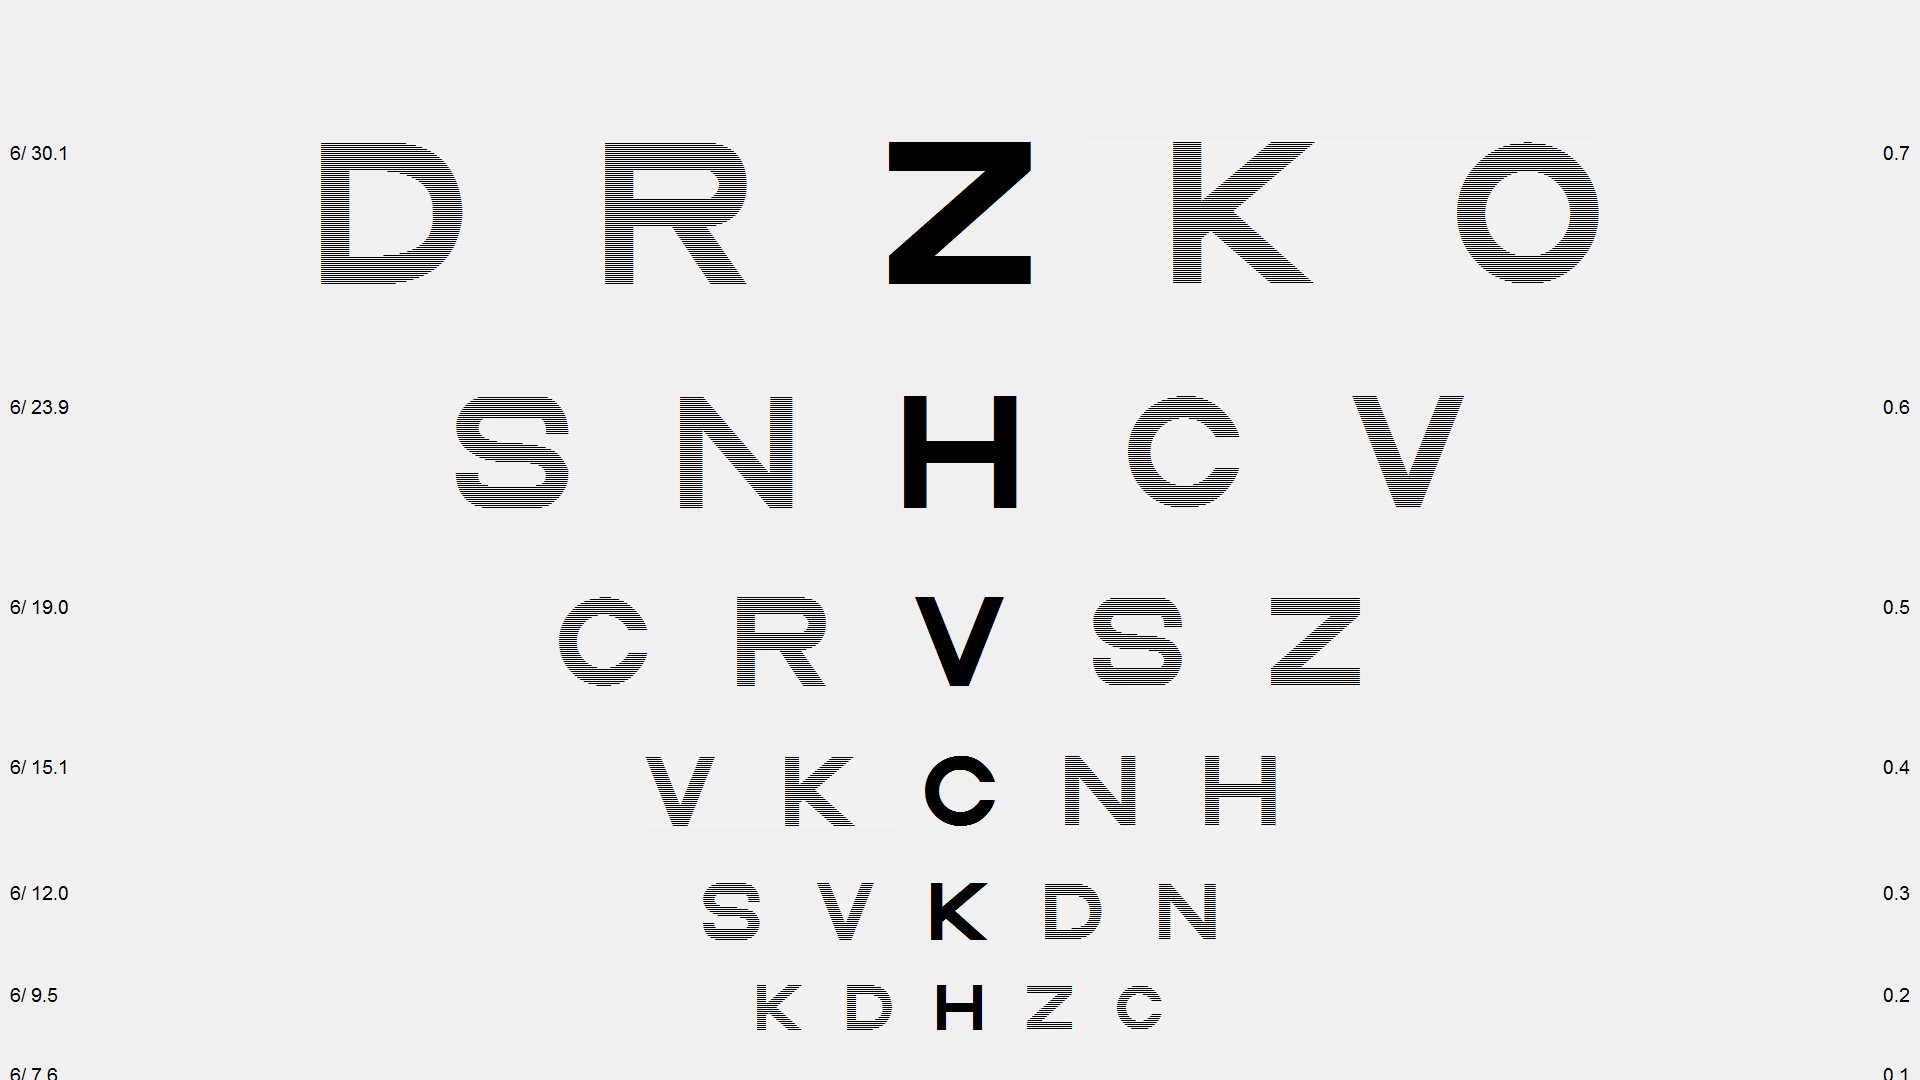 Binocular Test Chart